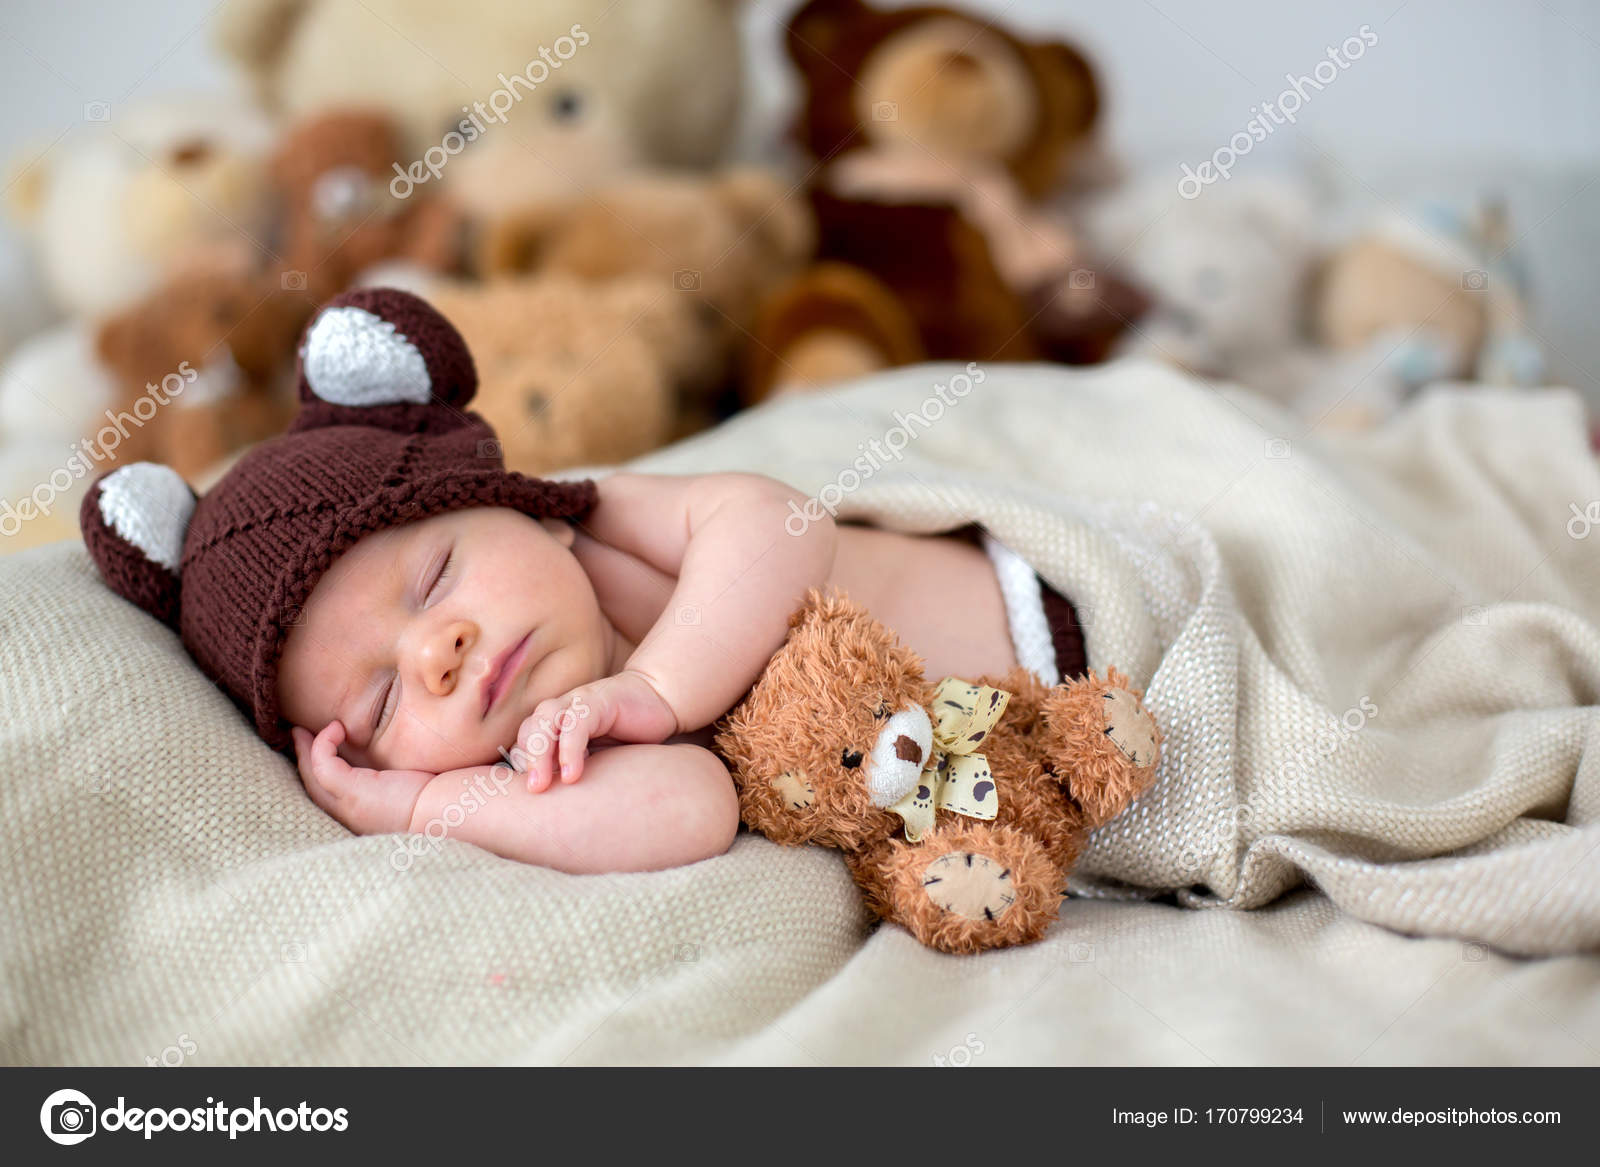 https://st3.depositphotos.com/2751239/17079/i/1600/depositphotos_170799234-stock-photo-little-newborn-baby-boy-sleeping.jpg